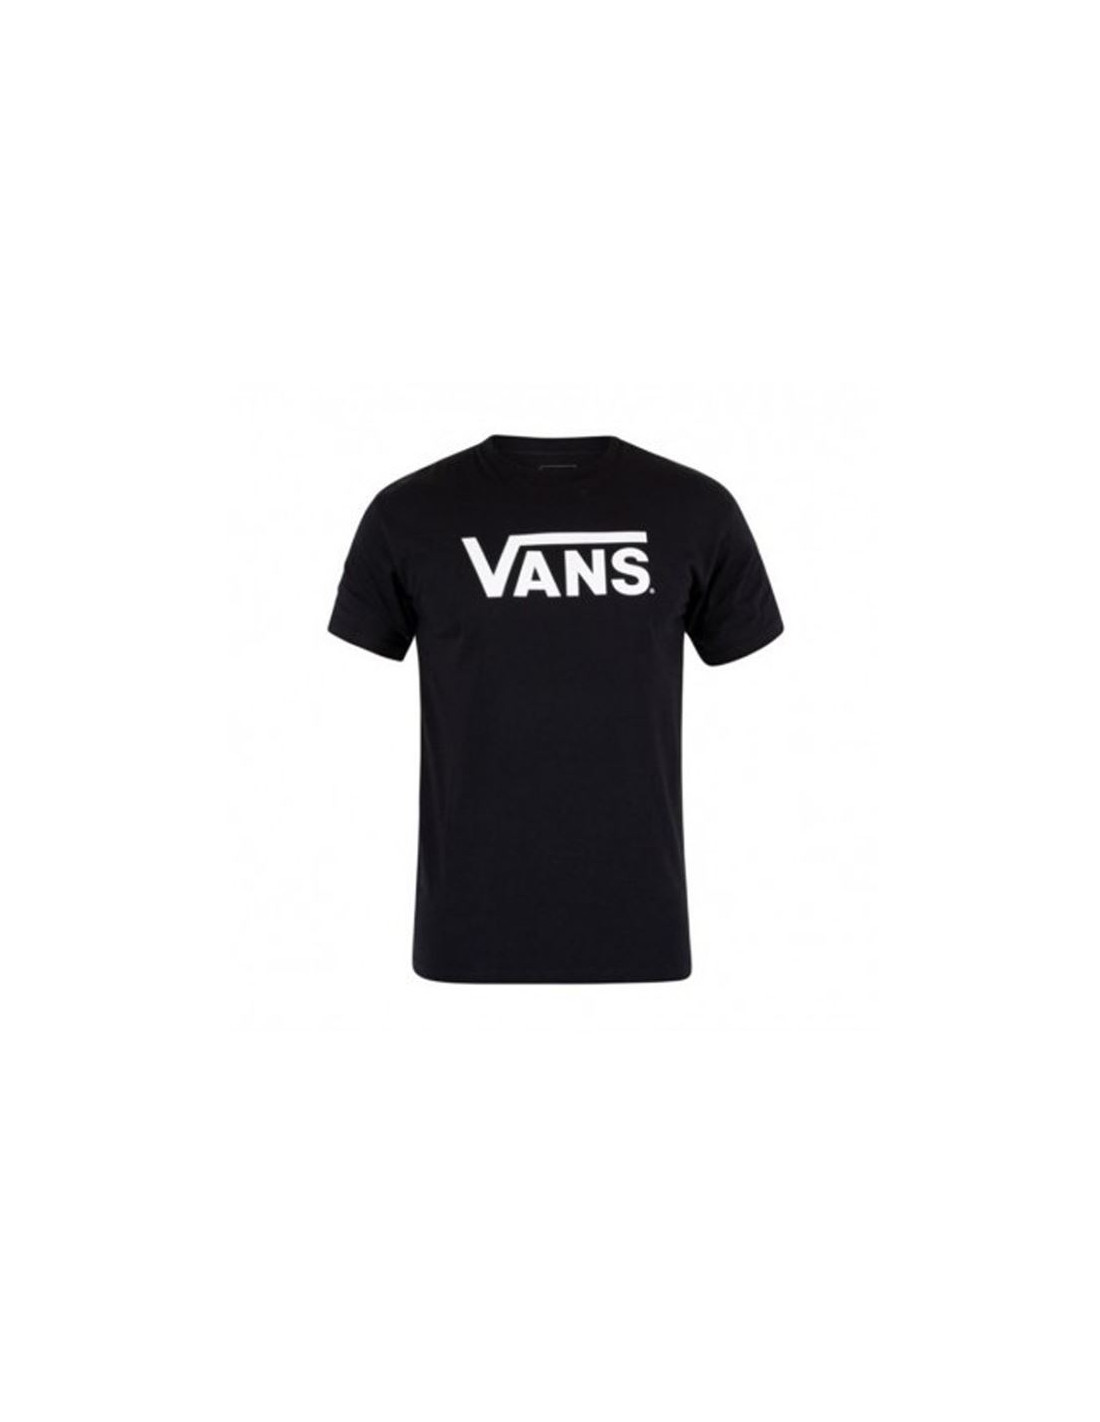 Camiseta vans drop v-b m black